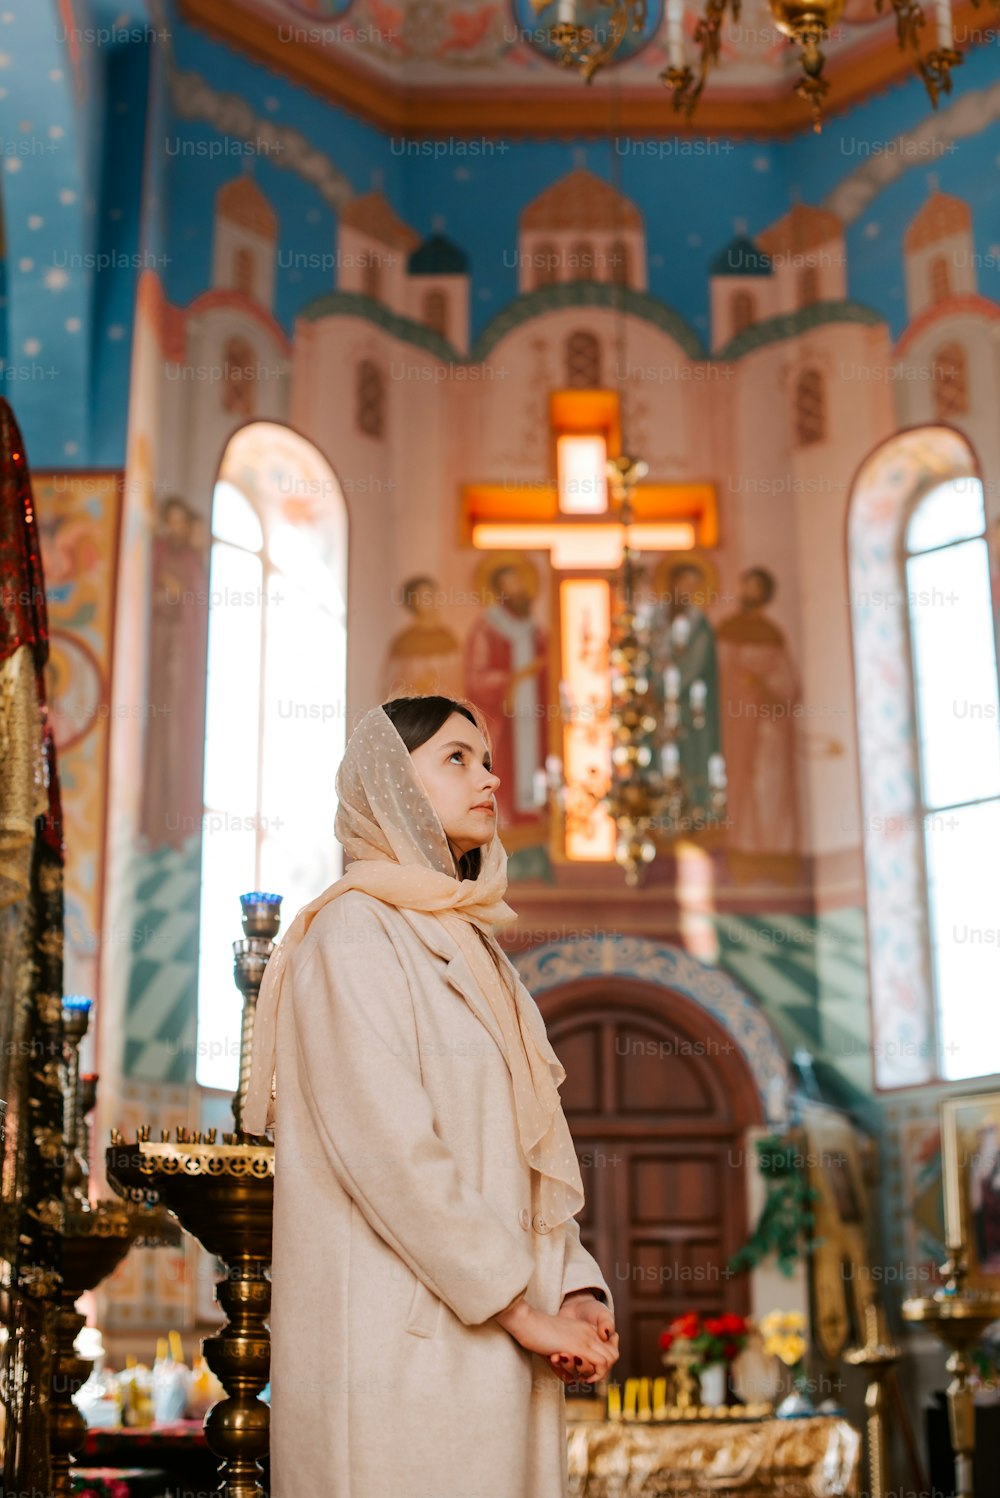 a woman wearing a veil standing in a church